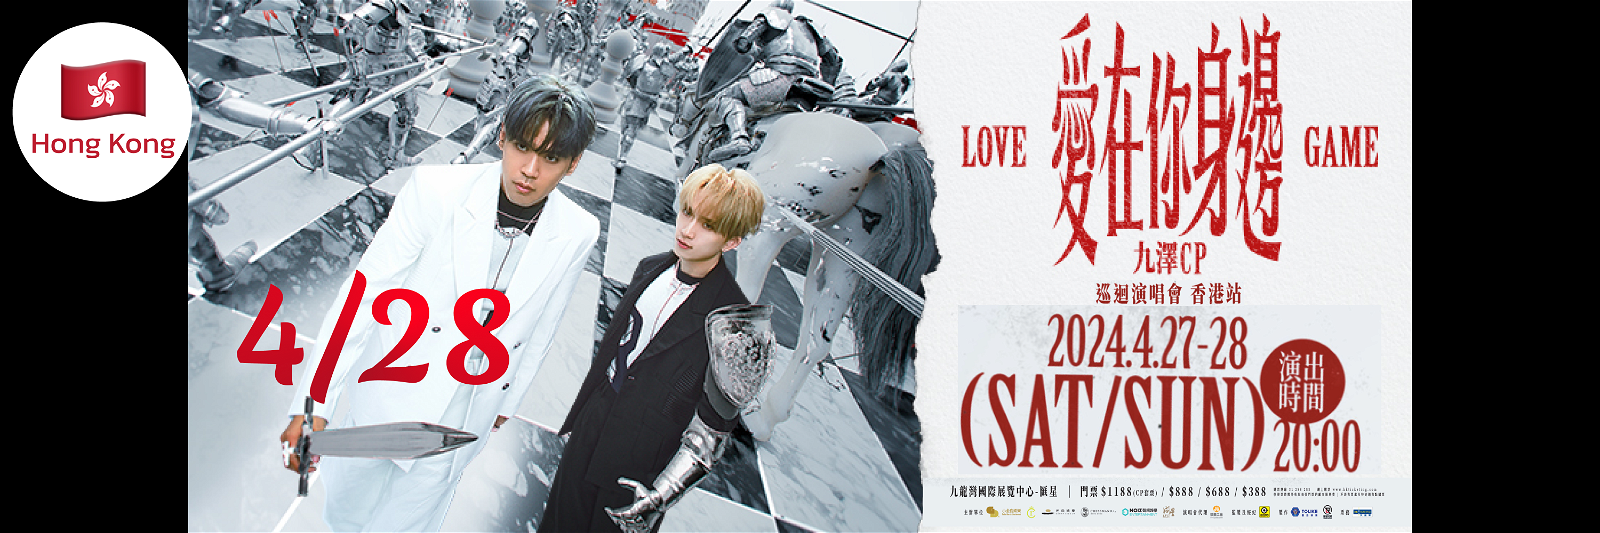 love-game-hk-20240428